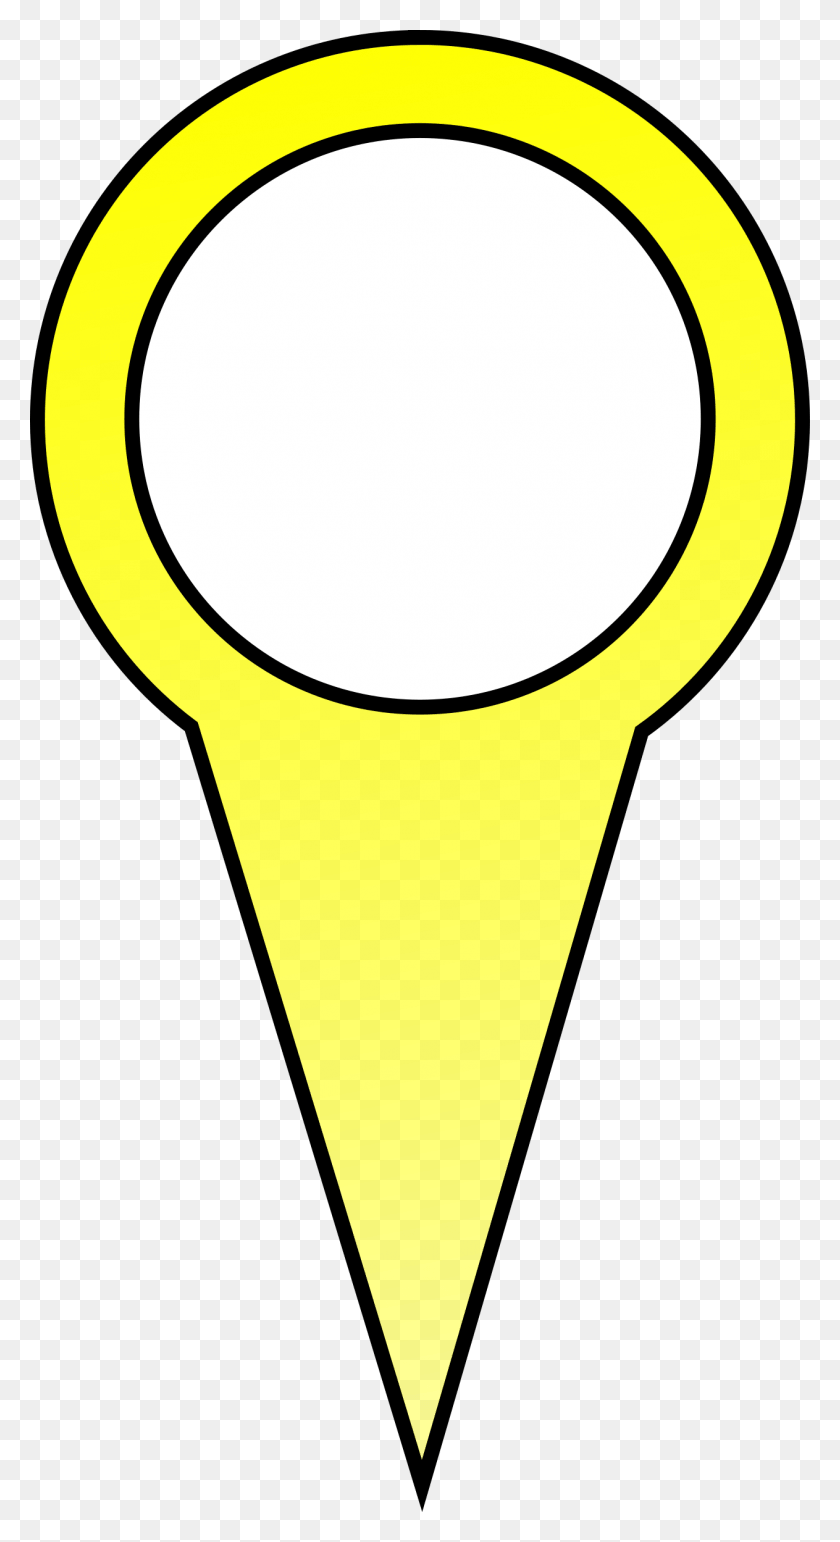 1263x2400 This Free Icons Design Of Yellow Map Pin, Plátano, Fruta, Planta Hd Png Descargar